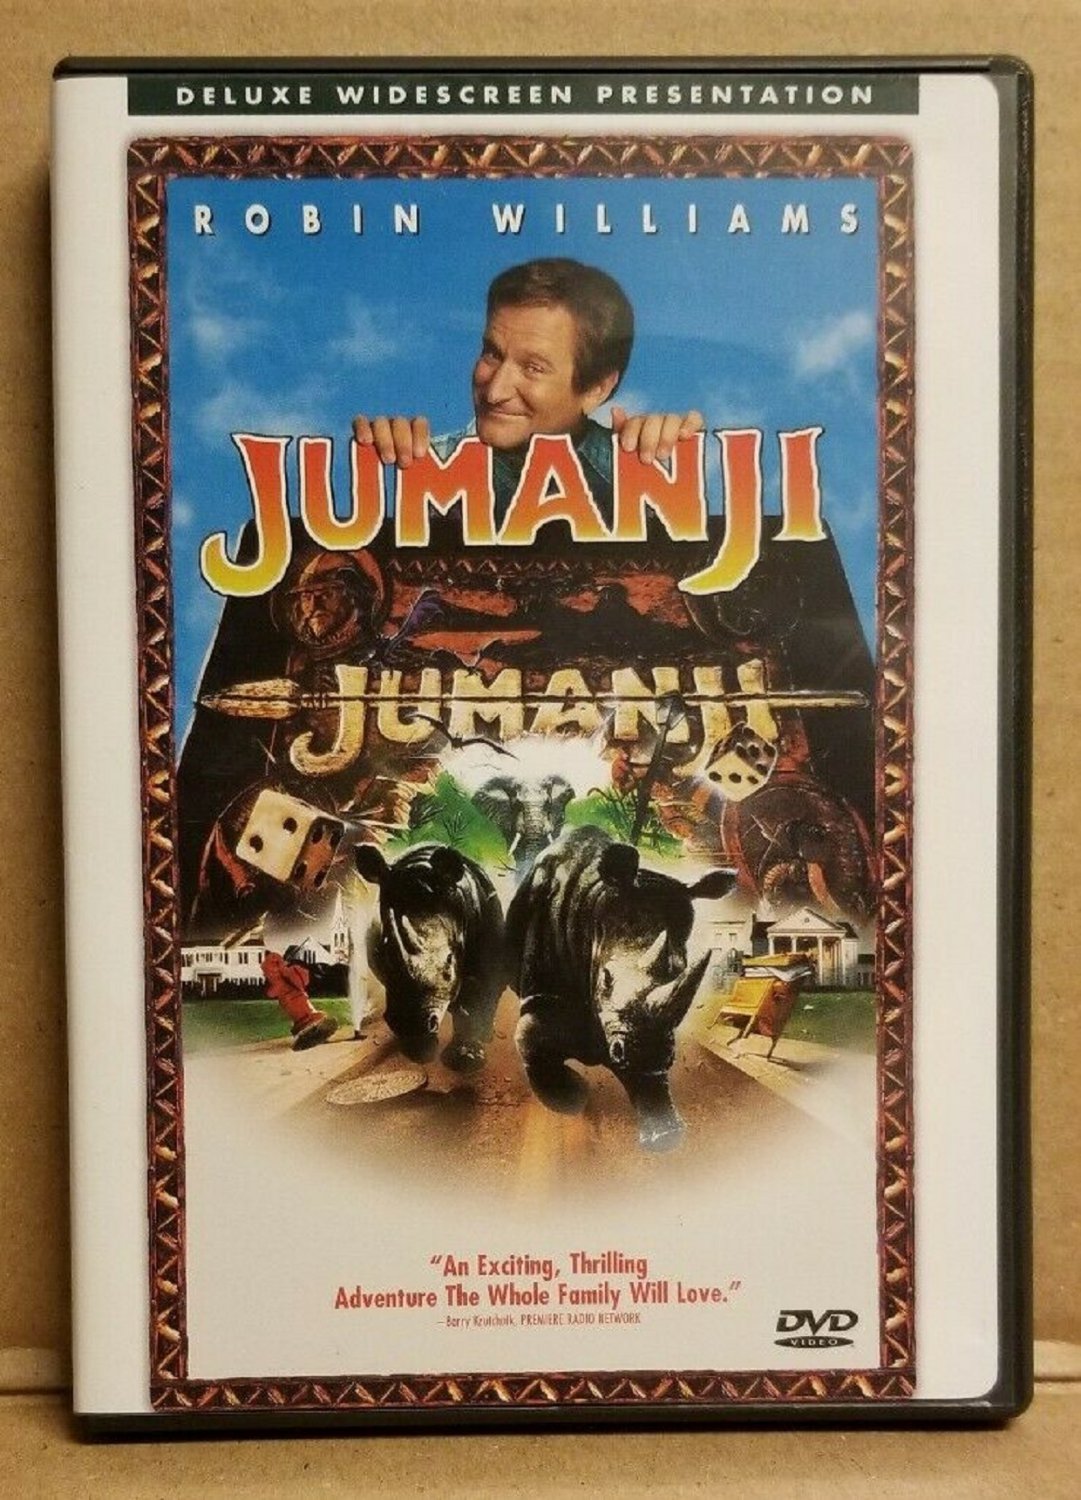 Opening to jumanji 1996 vhs